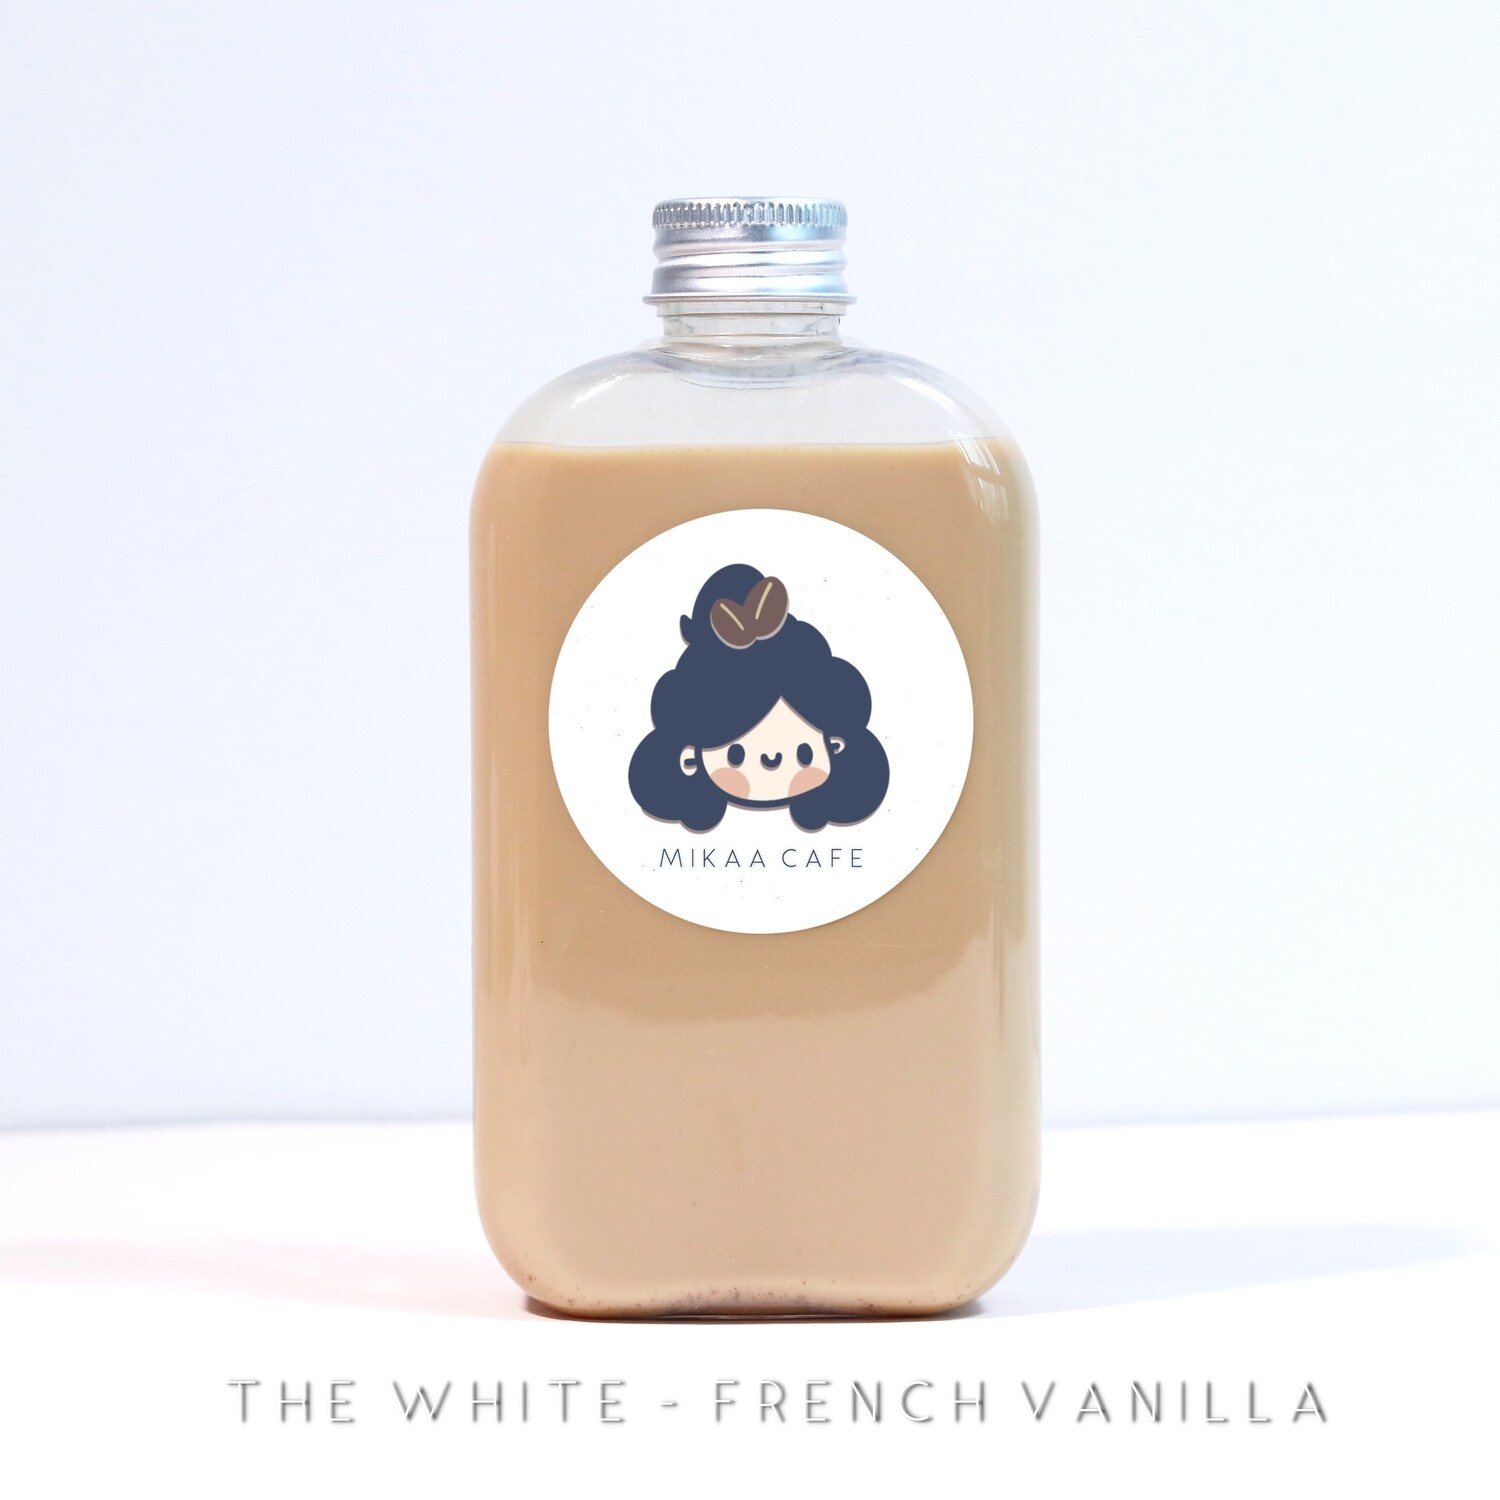 The White - French Vanilla